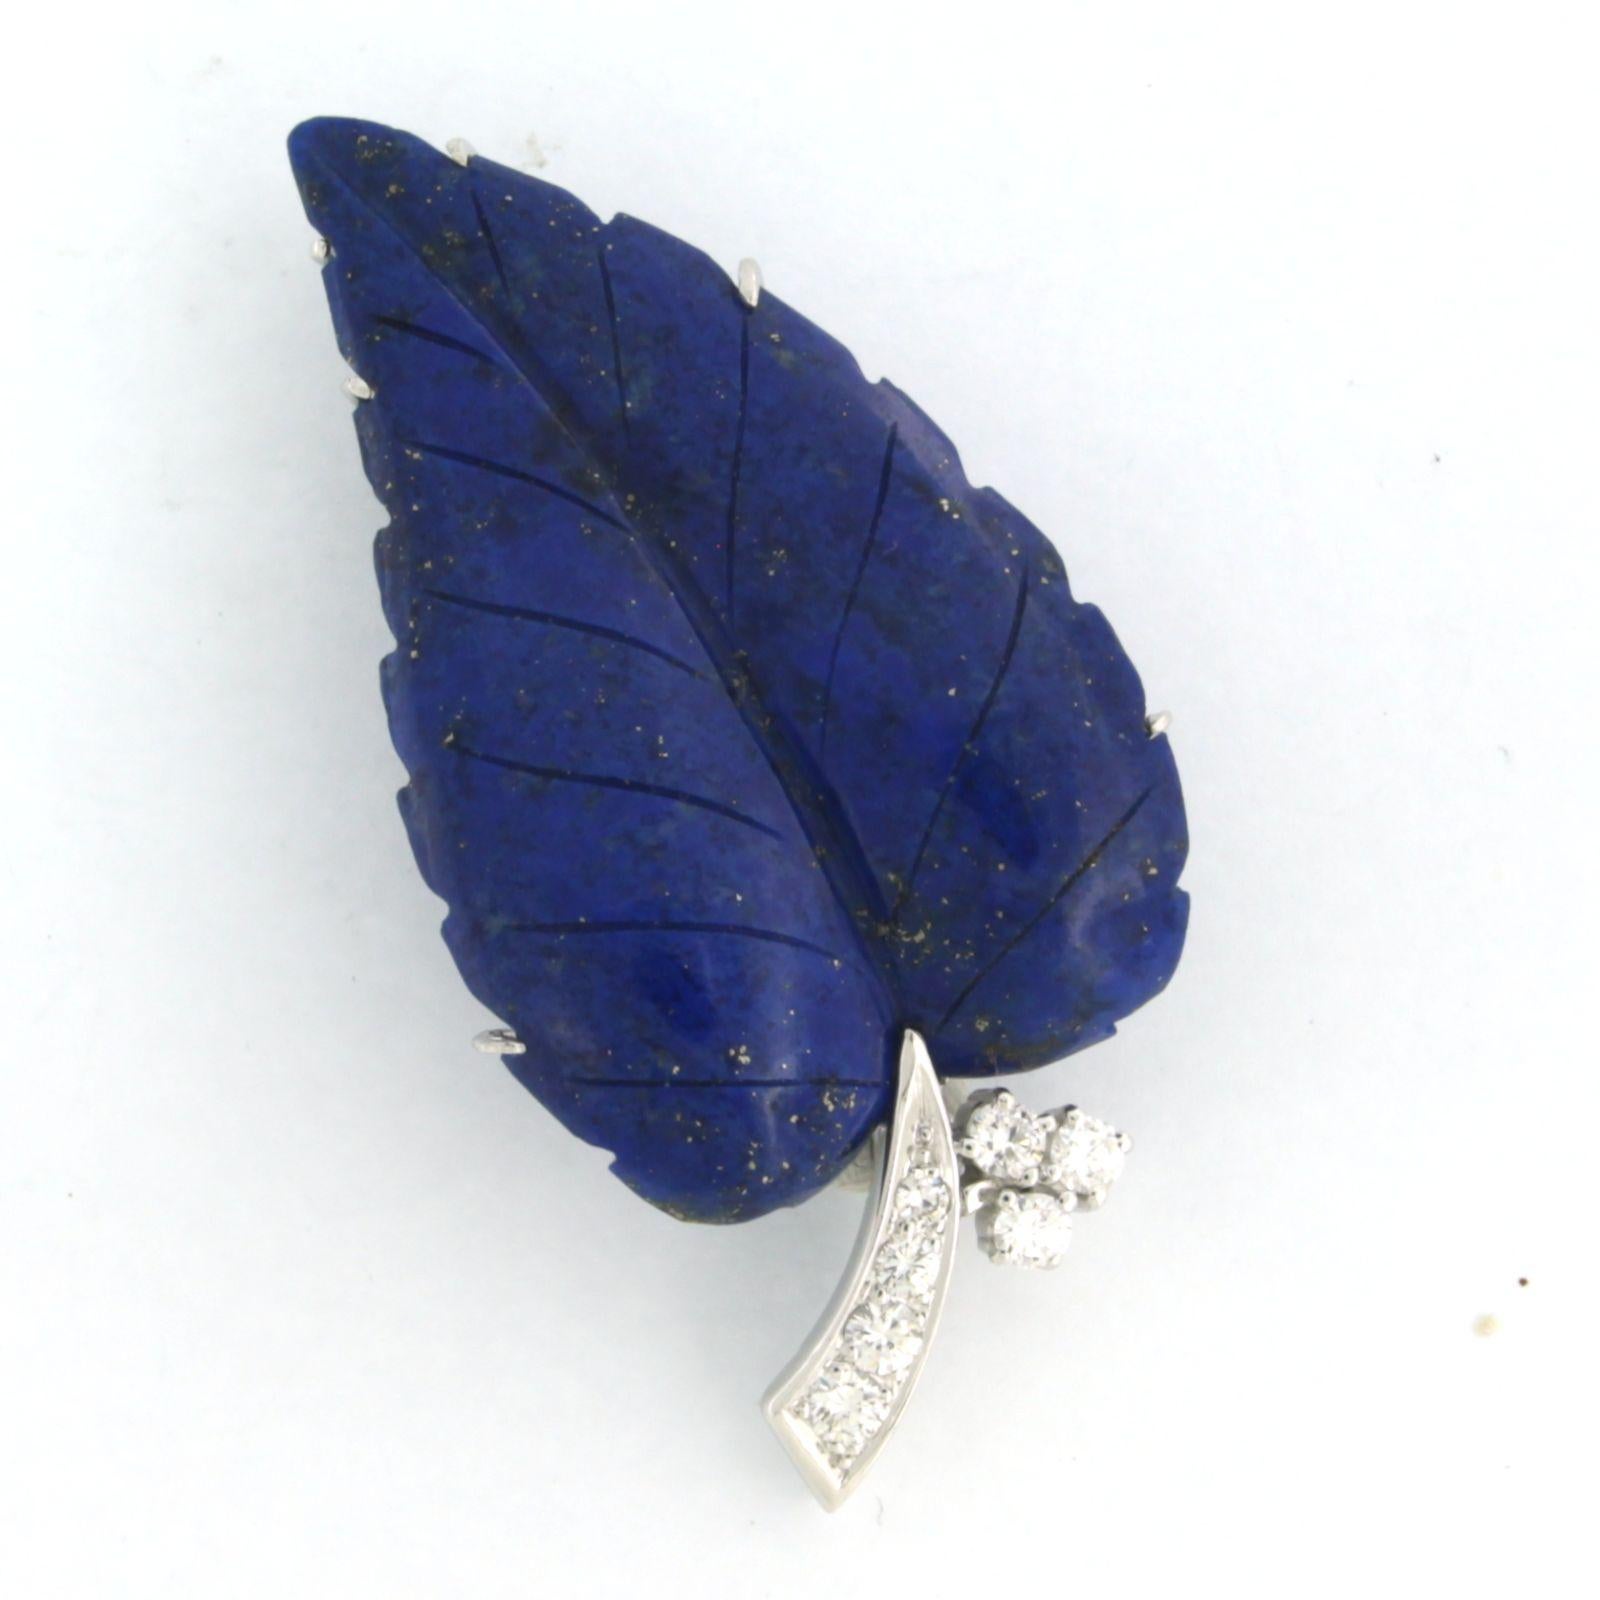 Brilliant Cut Brooch Lapis Lazuli leaf shape set with Diamonds, 18k white gold For Sale